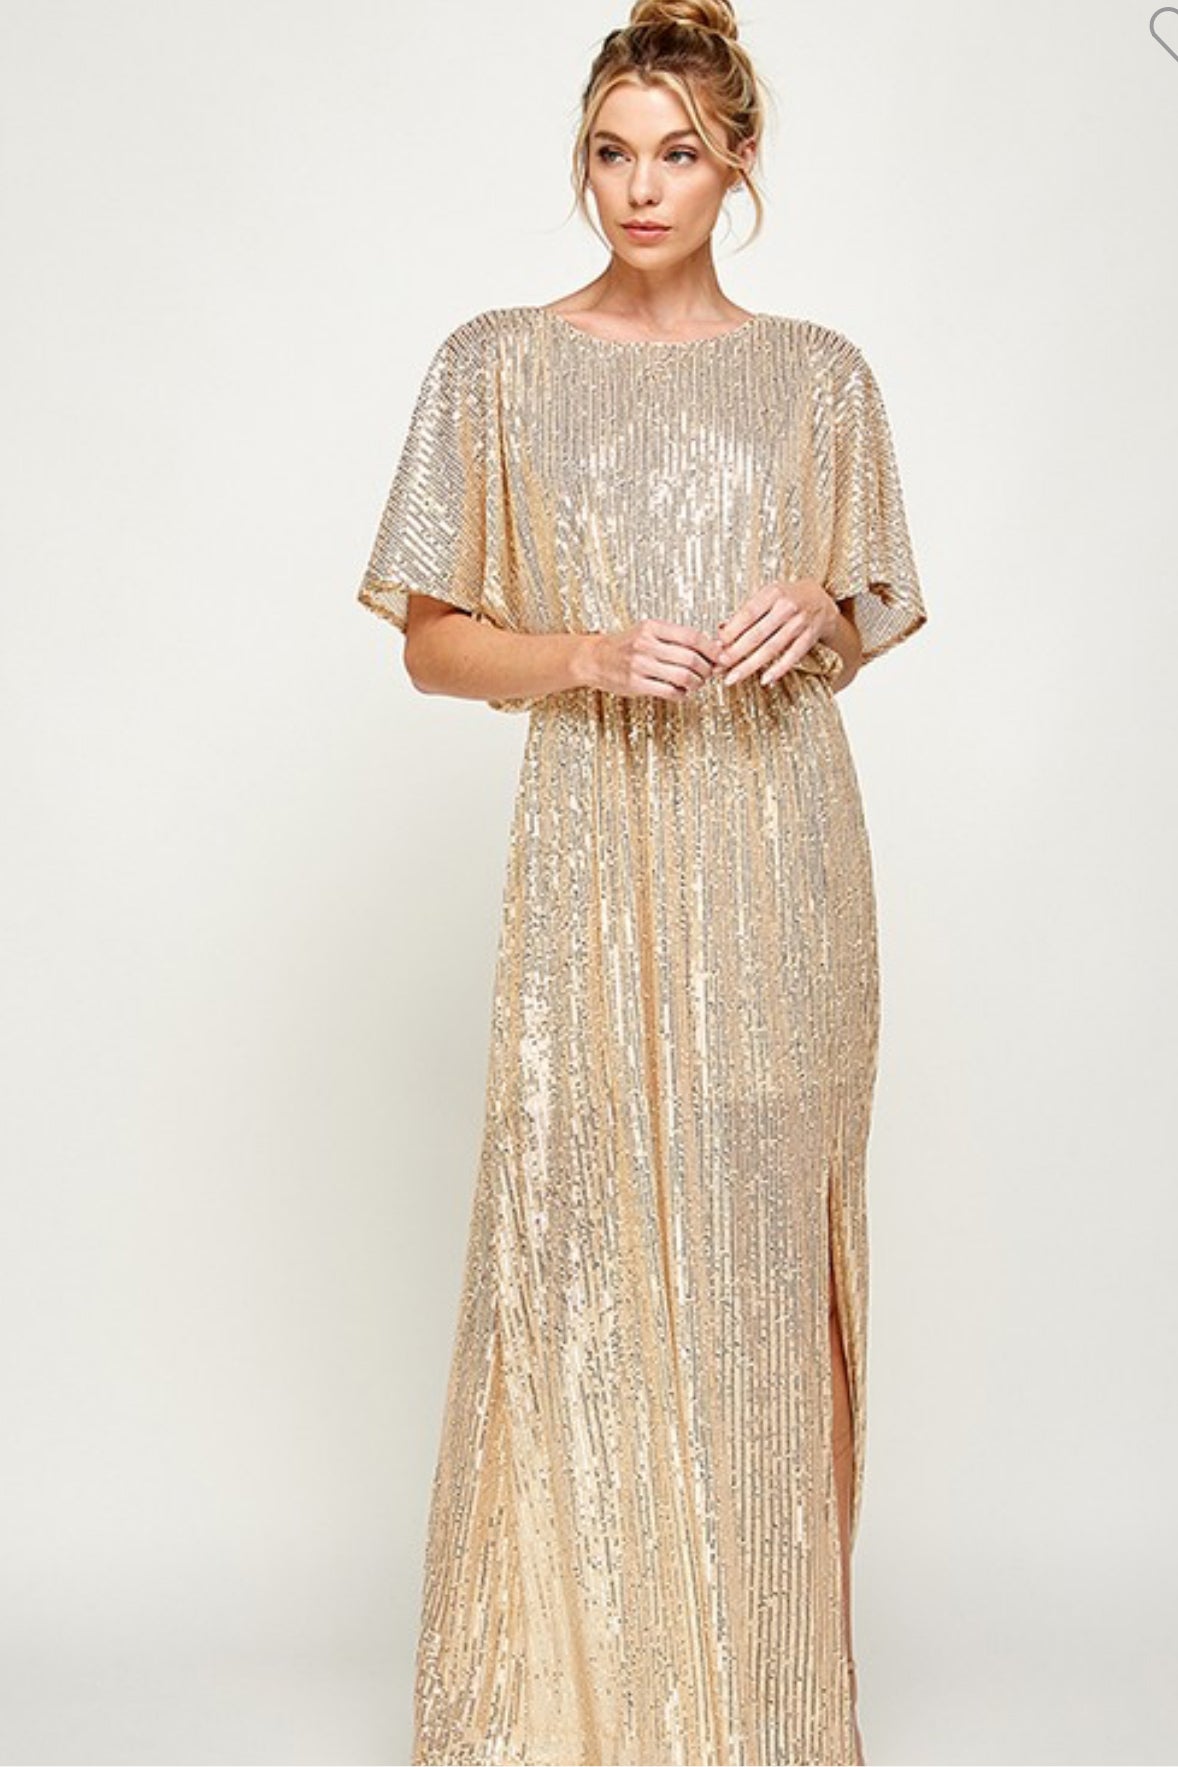 Cindirella Maxi Gold Dress